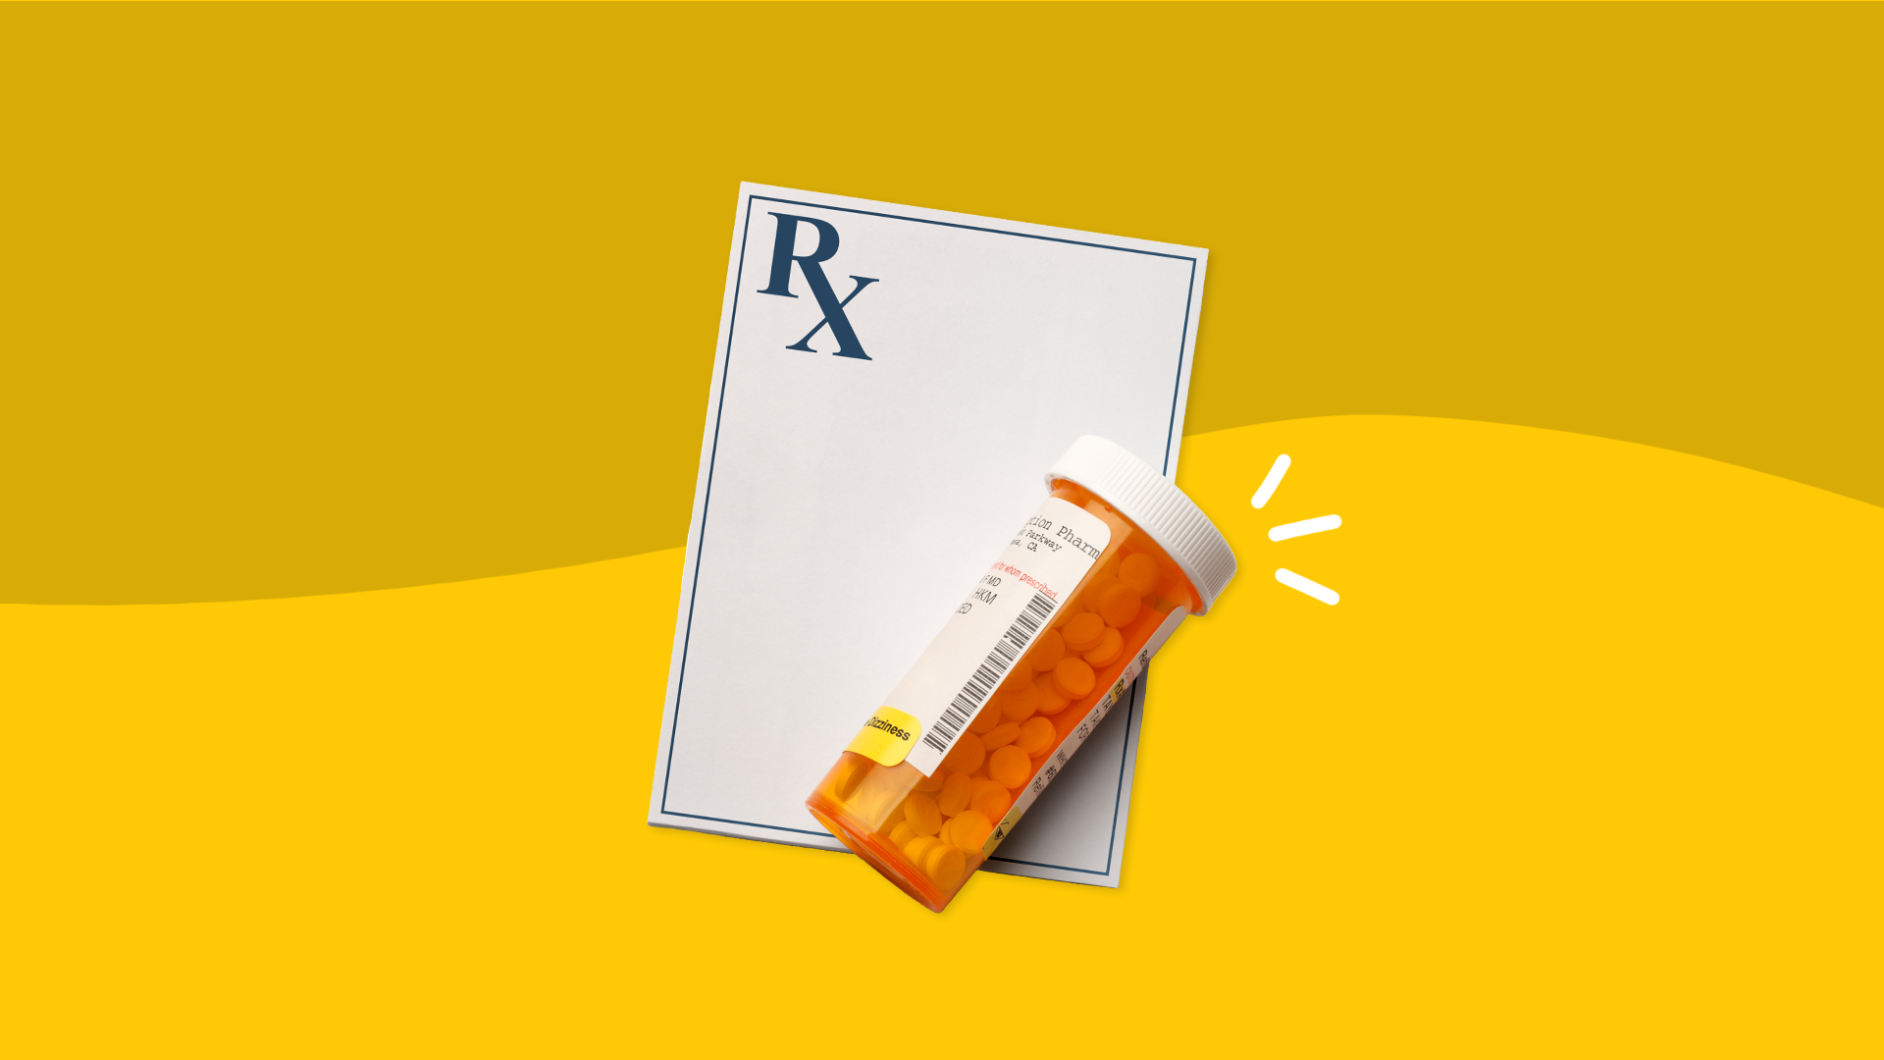 Prescription pad with pill bottle: Common side effects of Dexamethasone